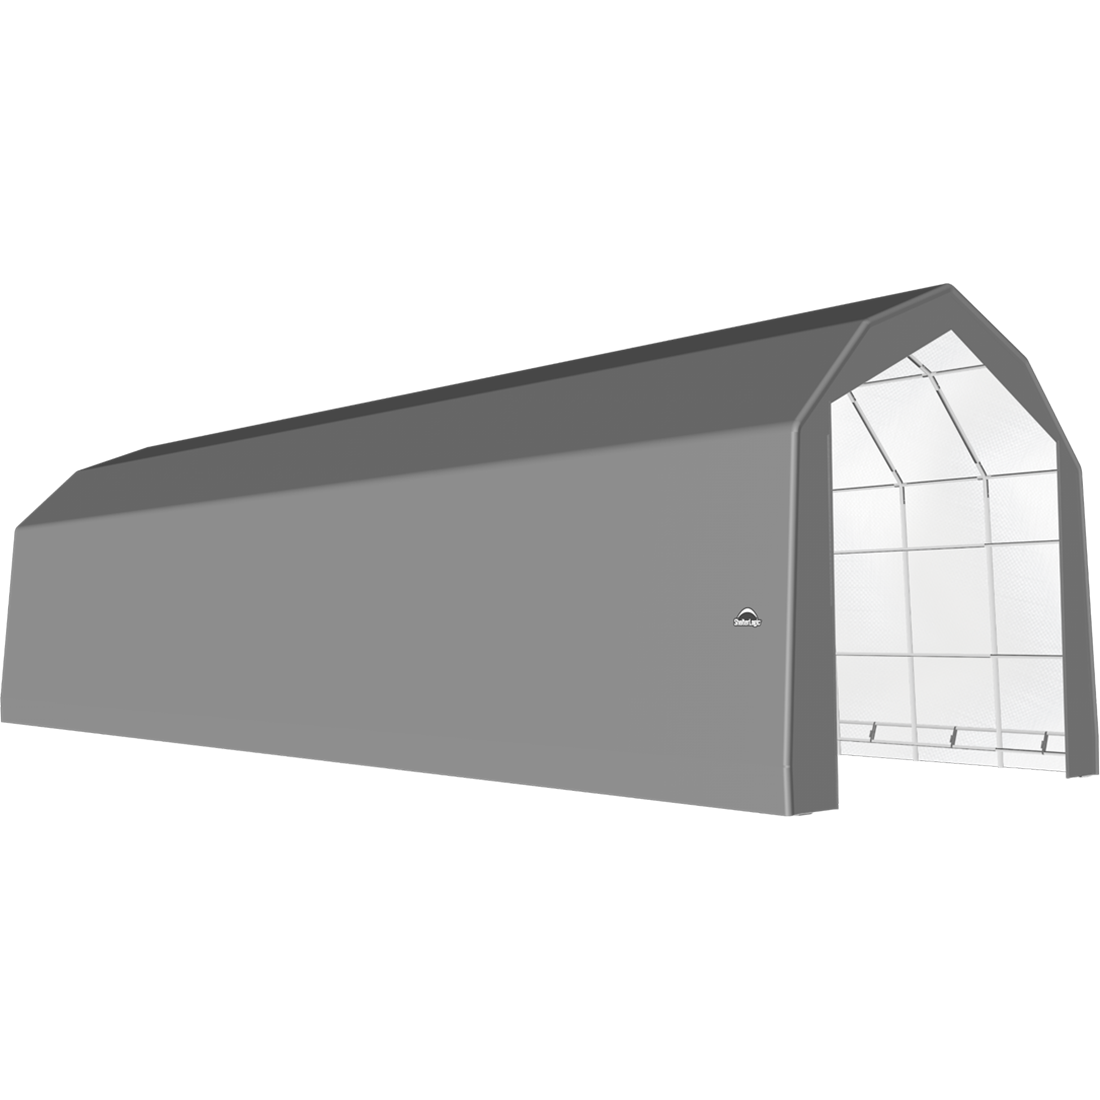 ShelterTech SP Series Barn Shelter, 20 ft. x 52 ft. x 18 ft. Heavy Duty PVC 14.5 oz. Gray